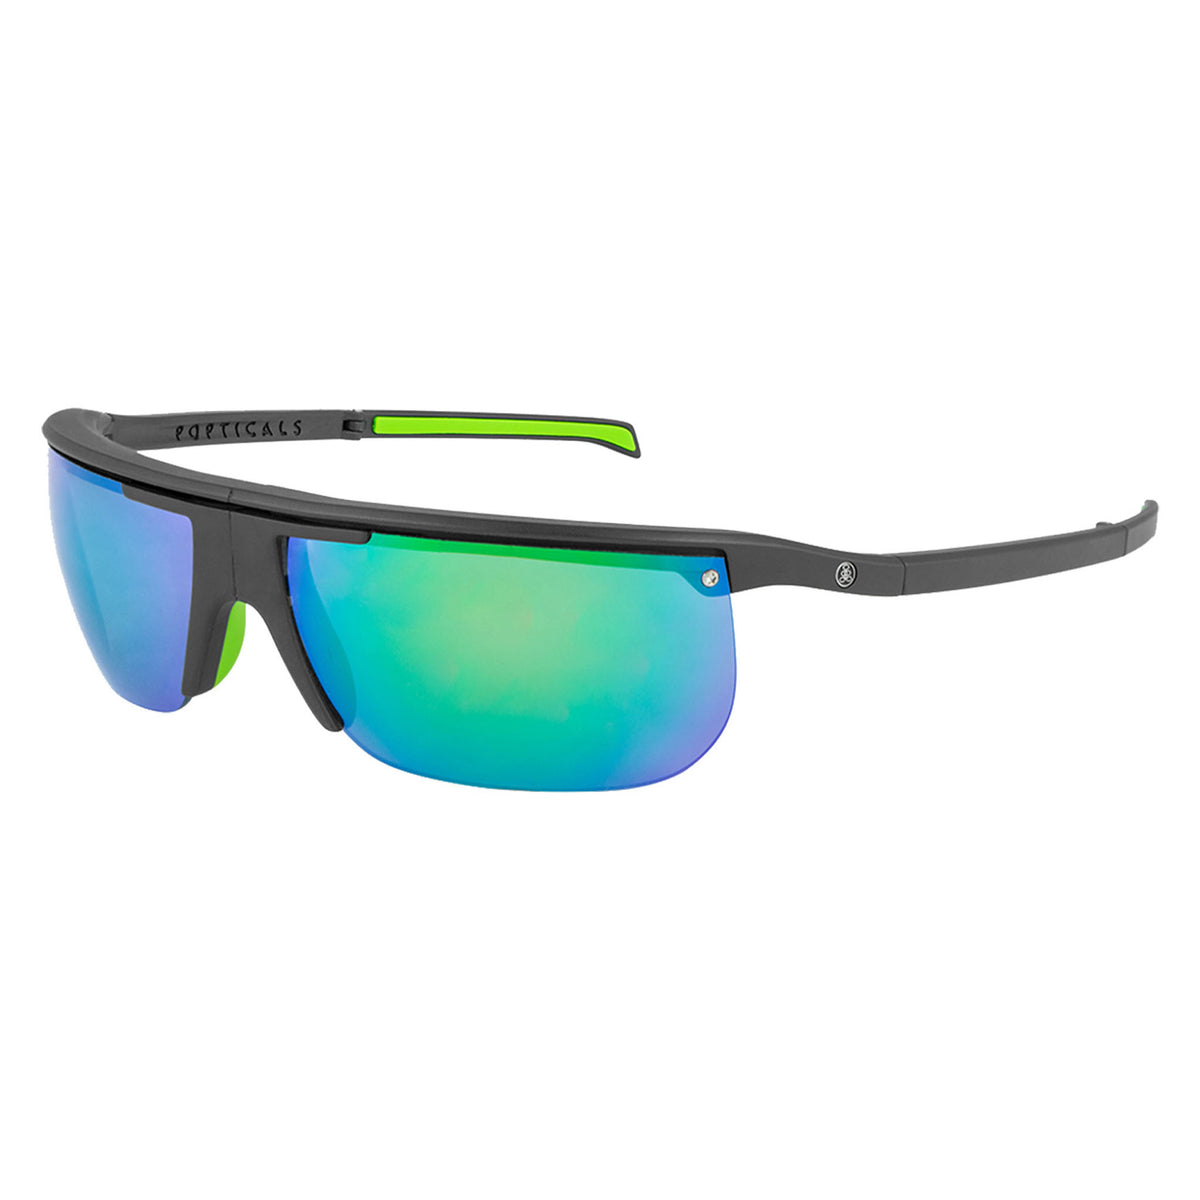 Popticals, Premium Compact Sunglasses, PopArt, 010030-BMEN, Polarized Sunglasses, Matte Black Frame, Gray Lenses with Green Mirror Finish, Glam View